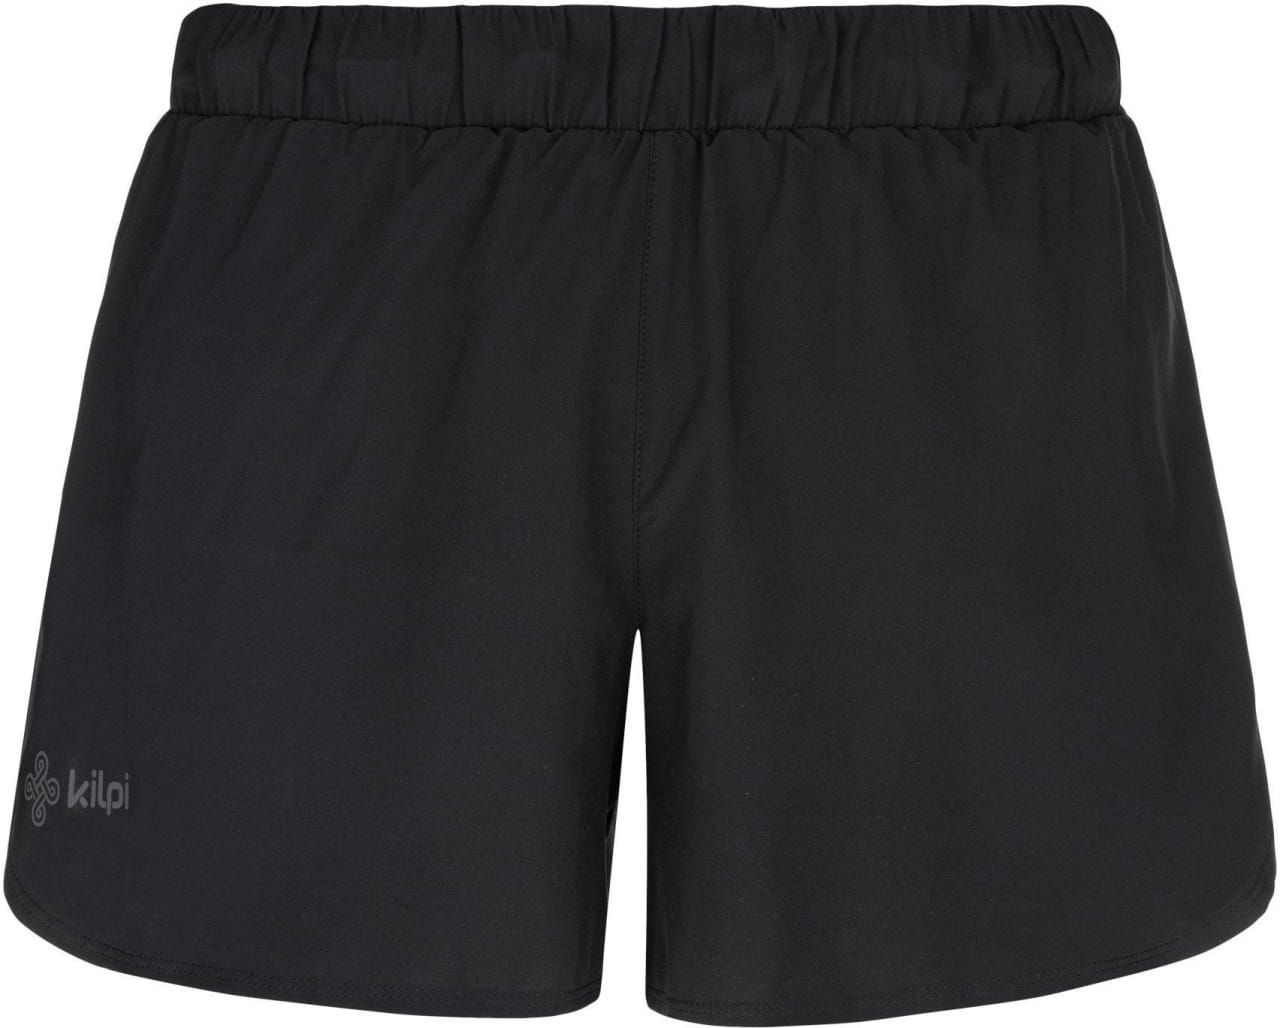 Ultraleichte Shorts für Männer Kilpi Comfy Černá